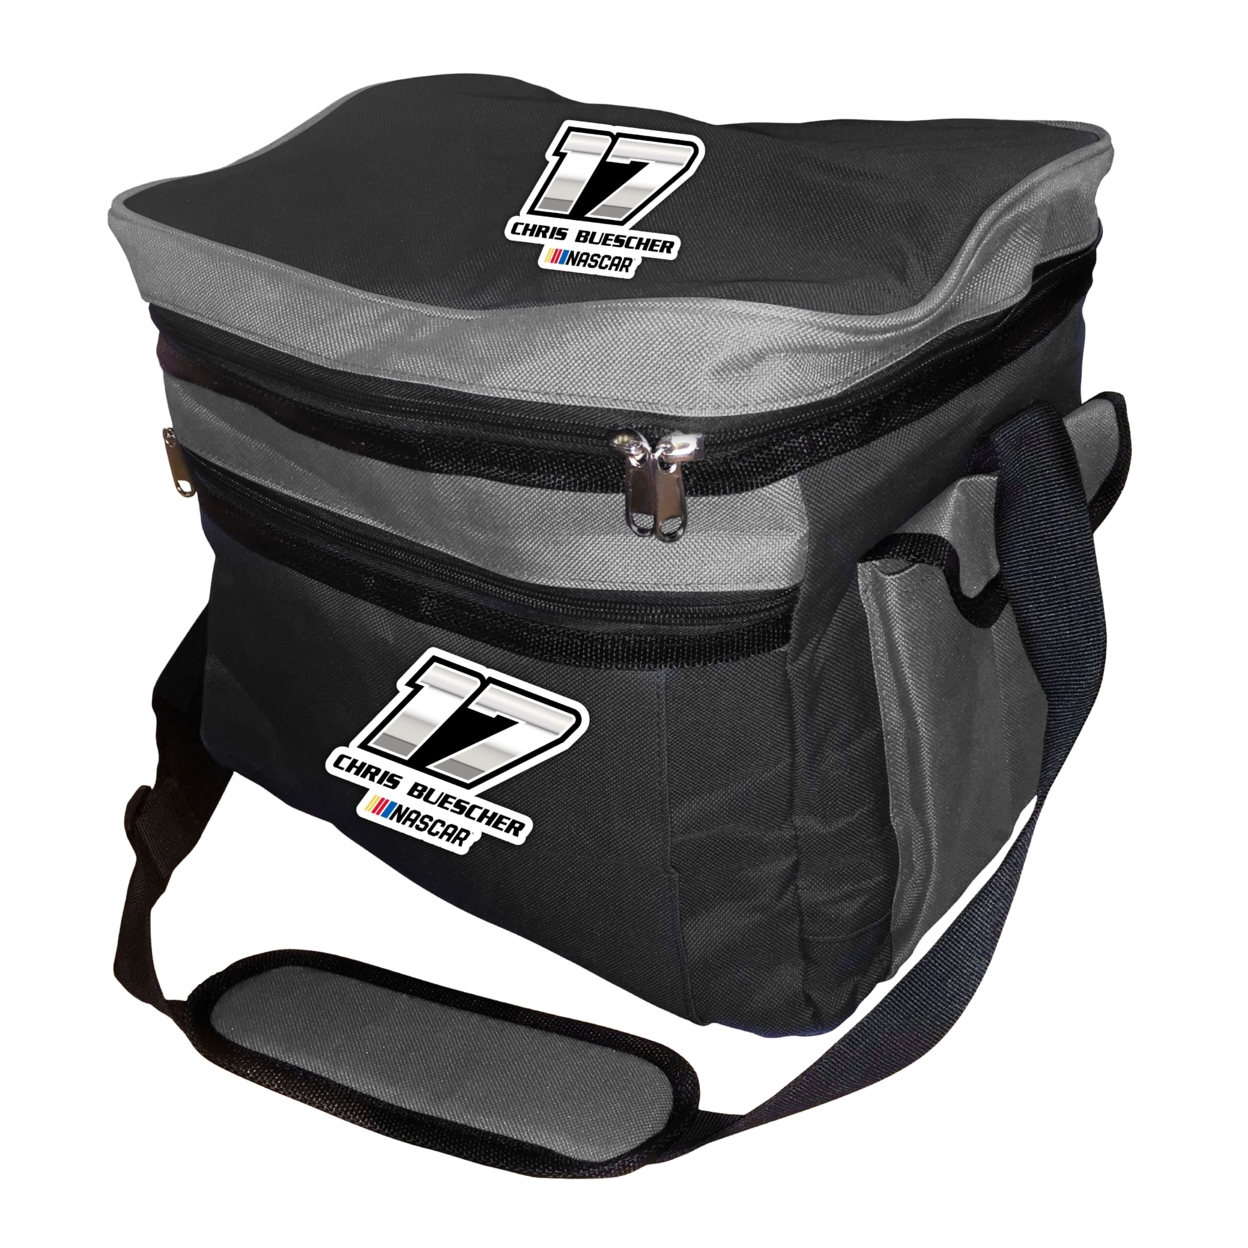 #17 Chris Buescher Officially Licensed 24 Pack Cooler Bag